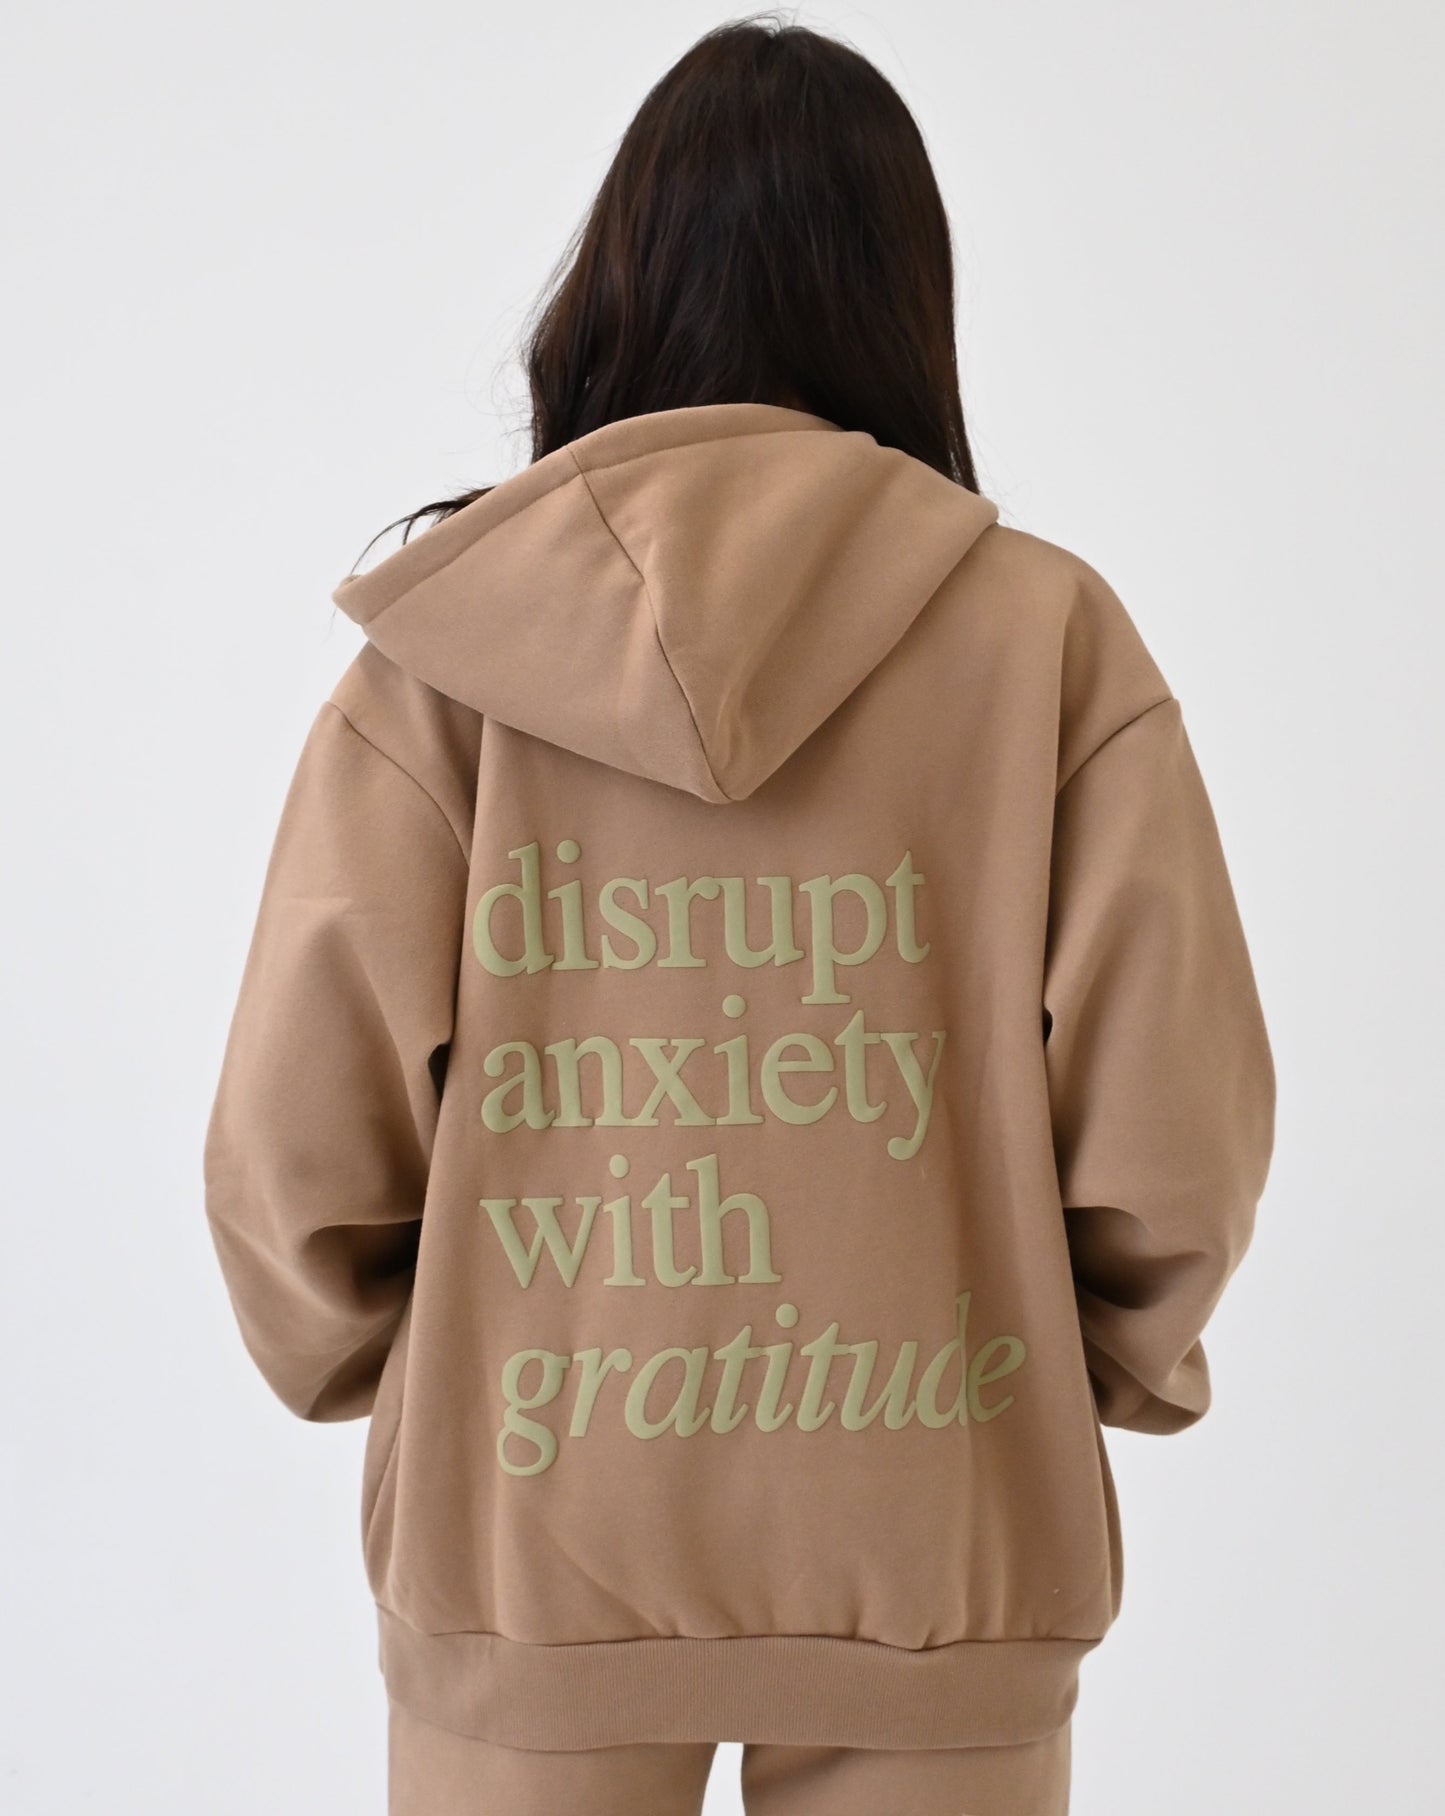 Disrupt Anxiety with Gratitude Zip-up Hoodie - Biscuit